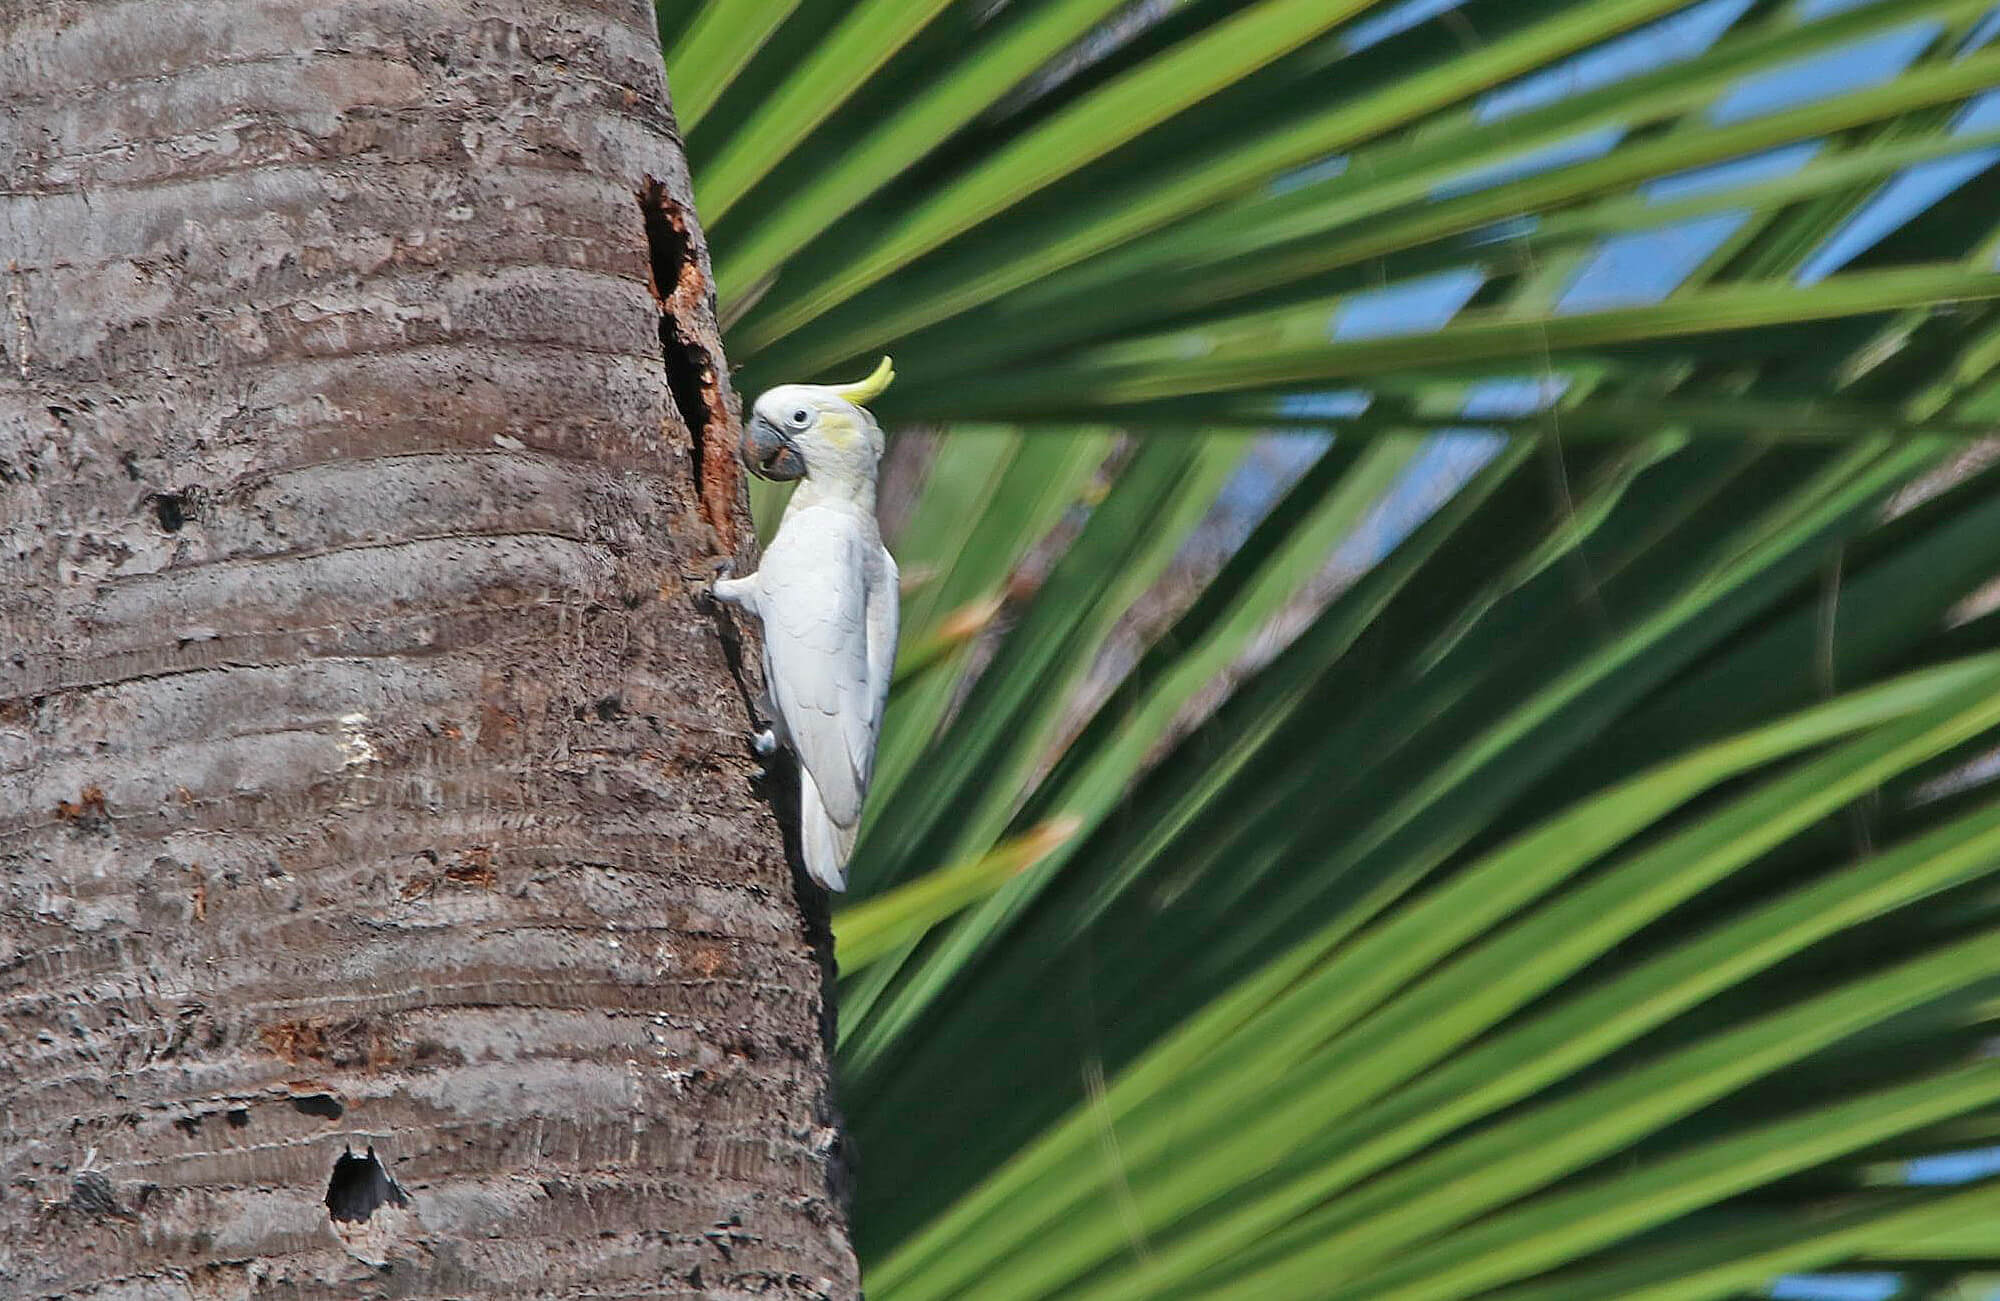 Yellow-crested Cockatoo | Bali & The Lesser Sundas